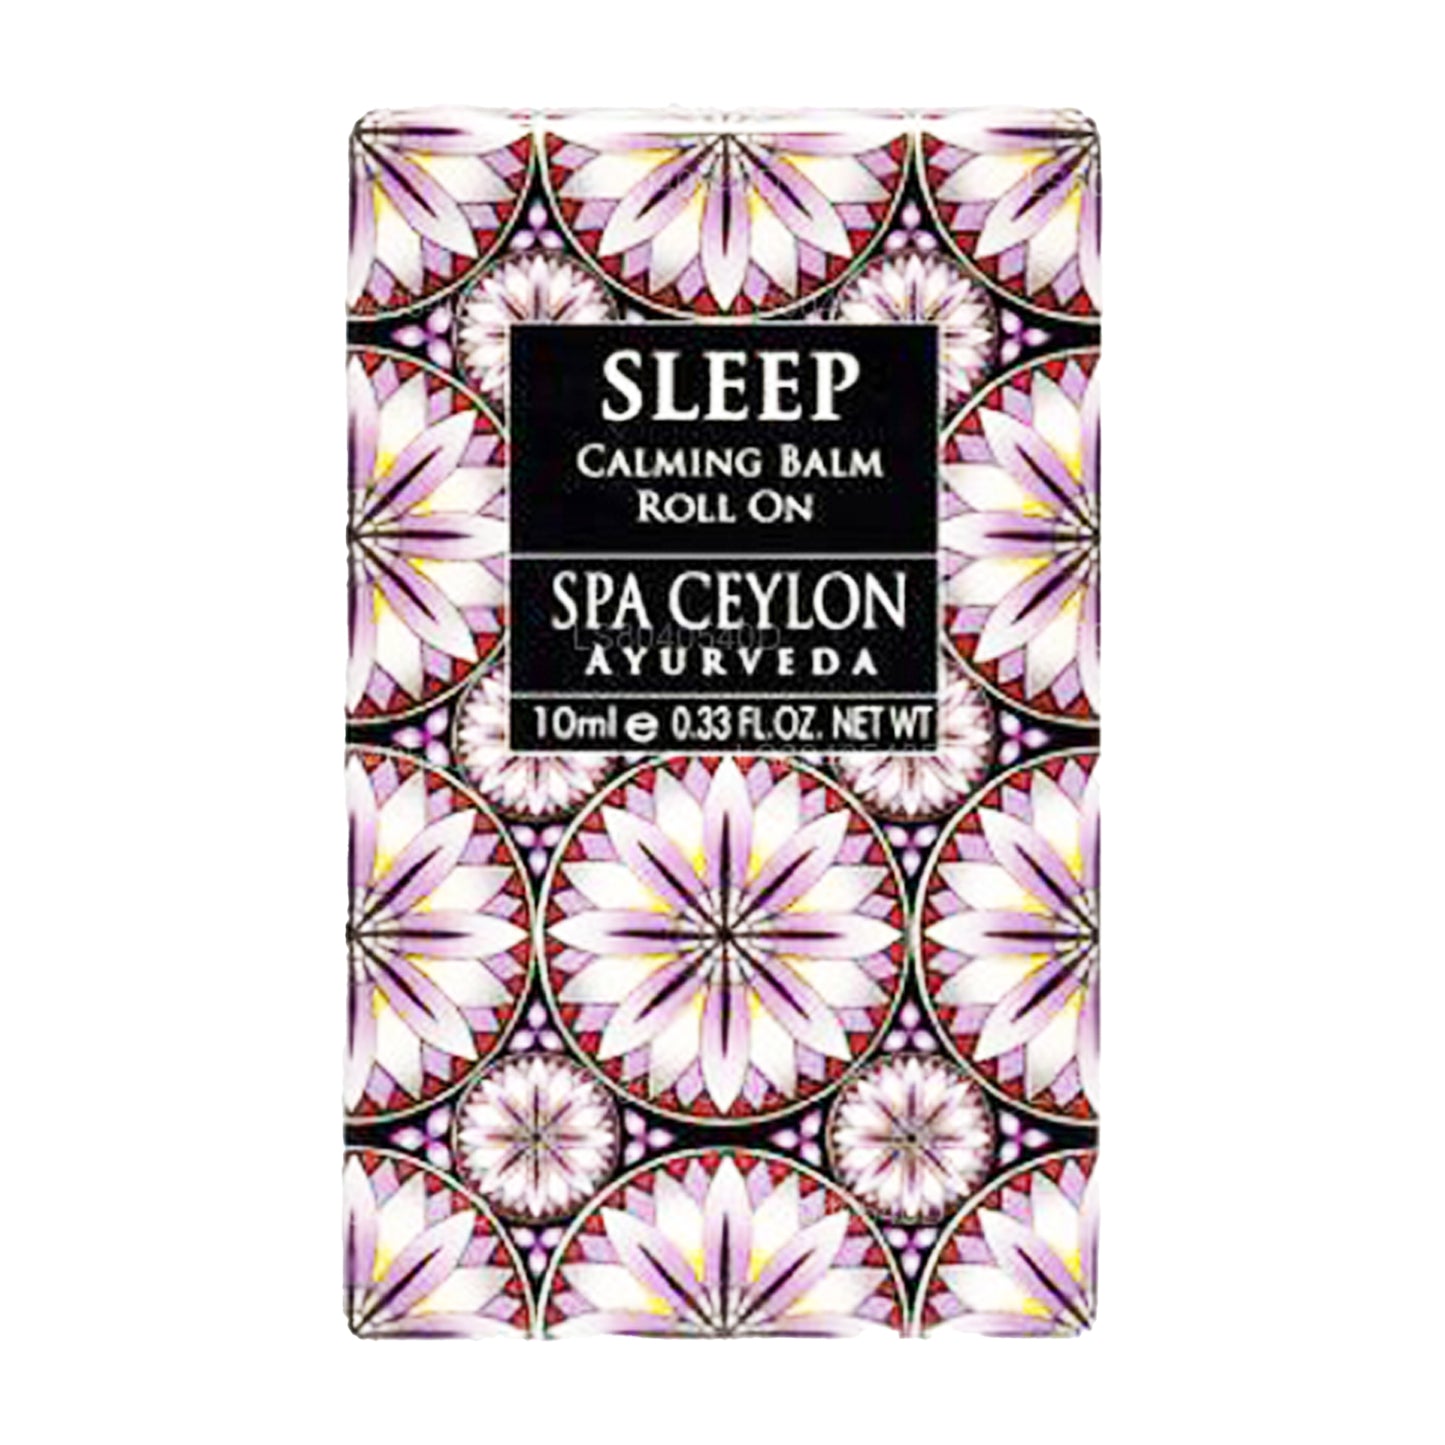 Spa Ceylon Sleep Calming Balm Roll On (10ml)